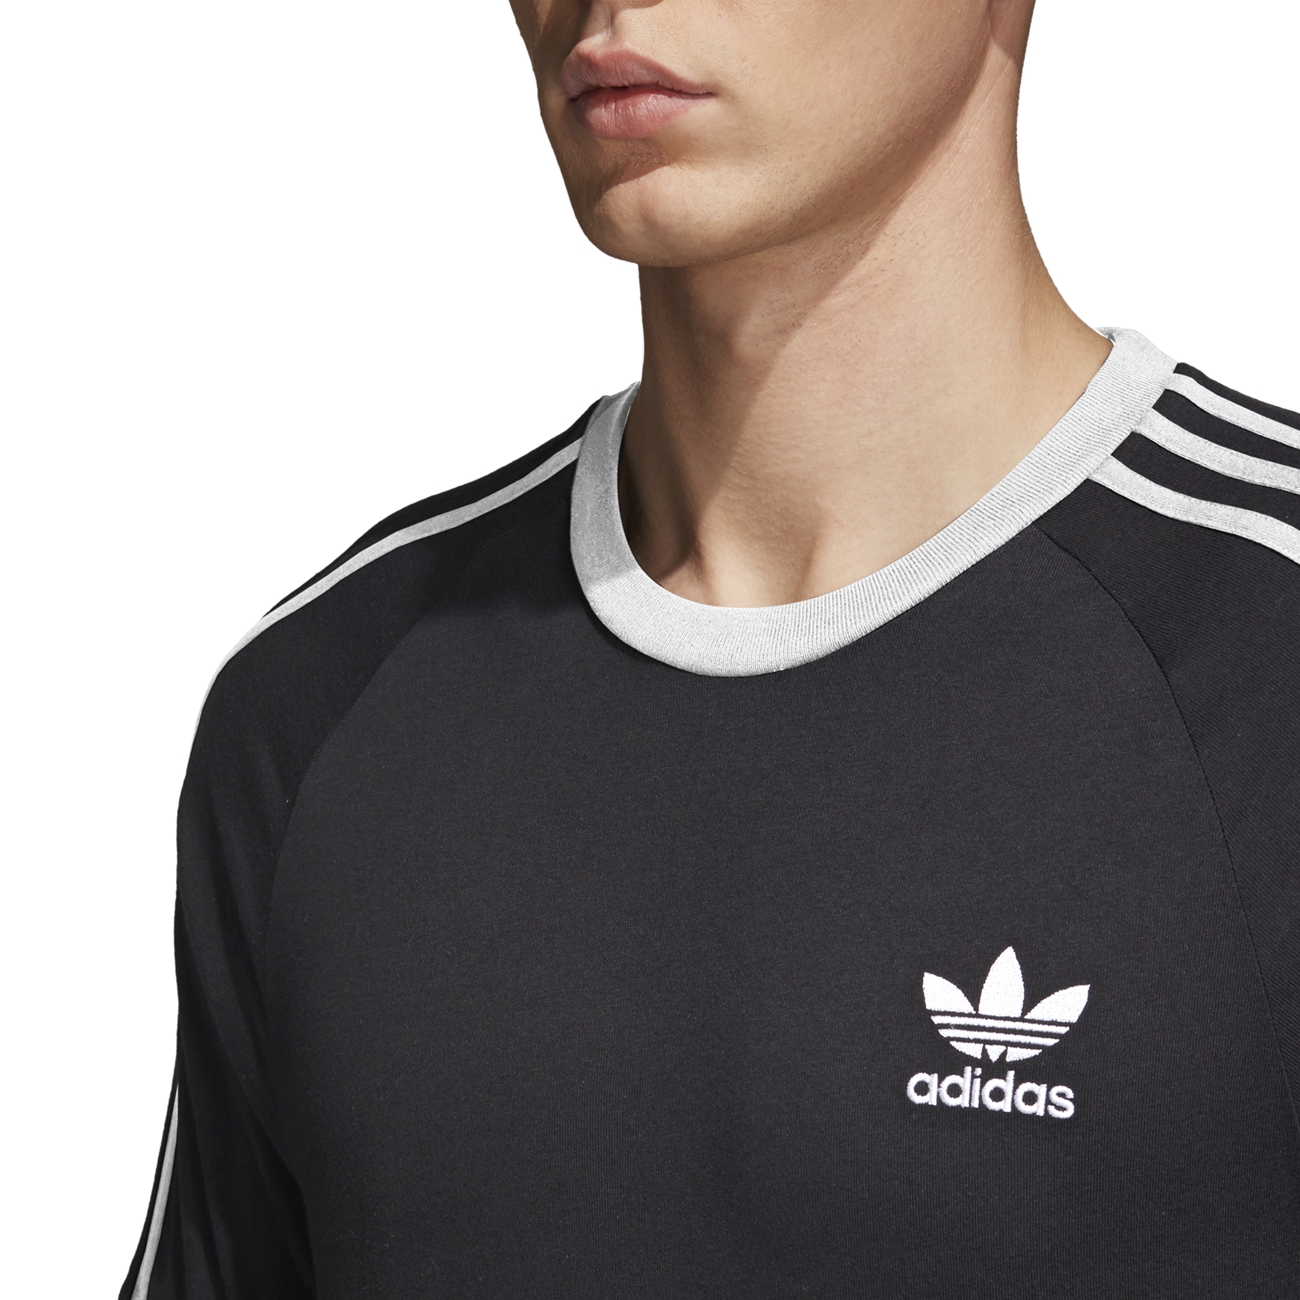 adidas Originals STRIPES TEE UNISEX - T-shirt imprimé - black/noir